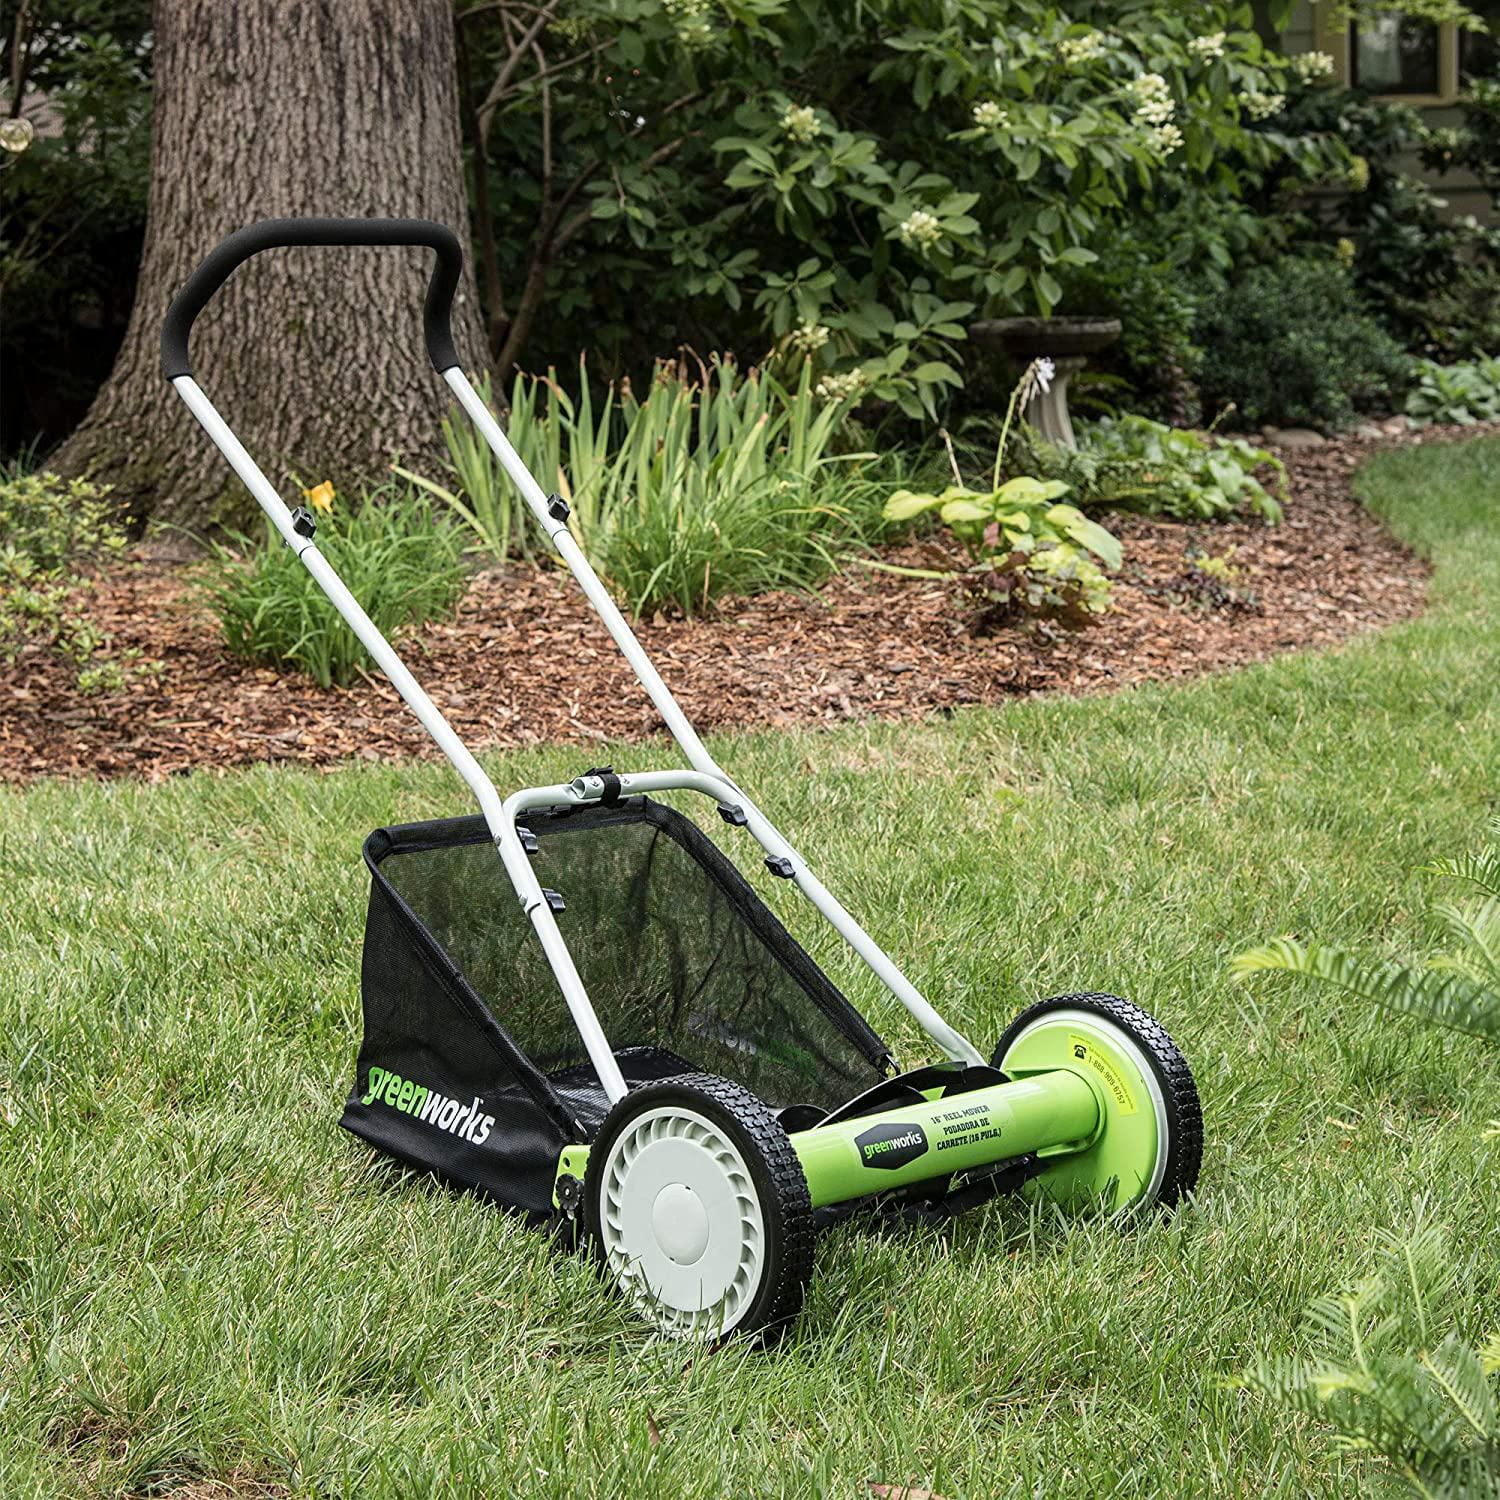 Greenworks 16-inch Reel Mower, Quick, quiet and easy maintenance